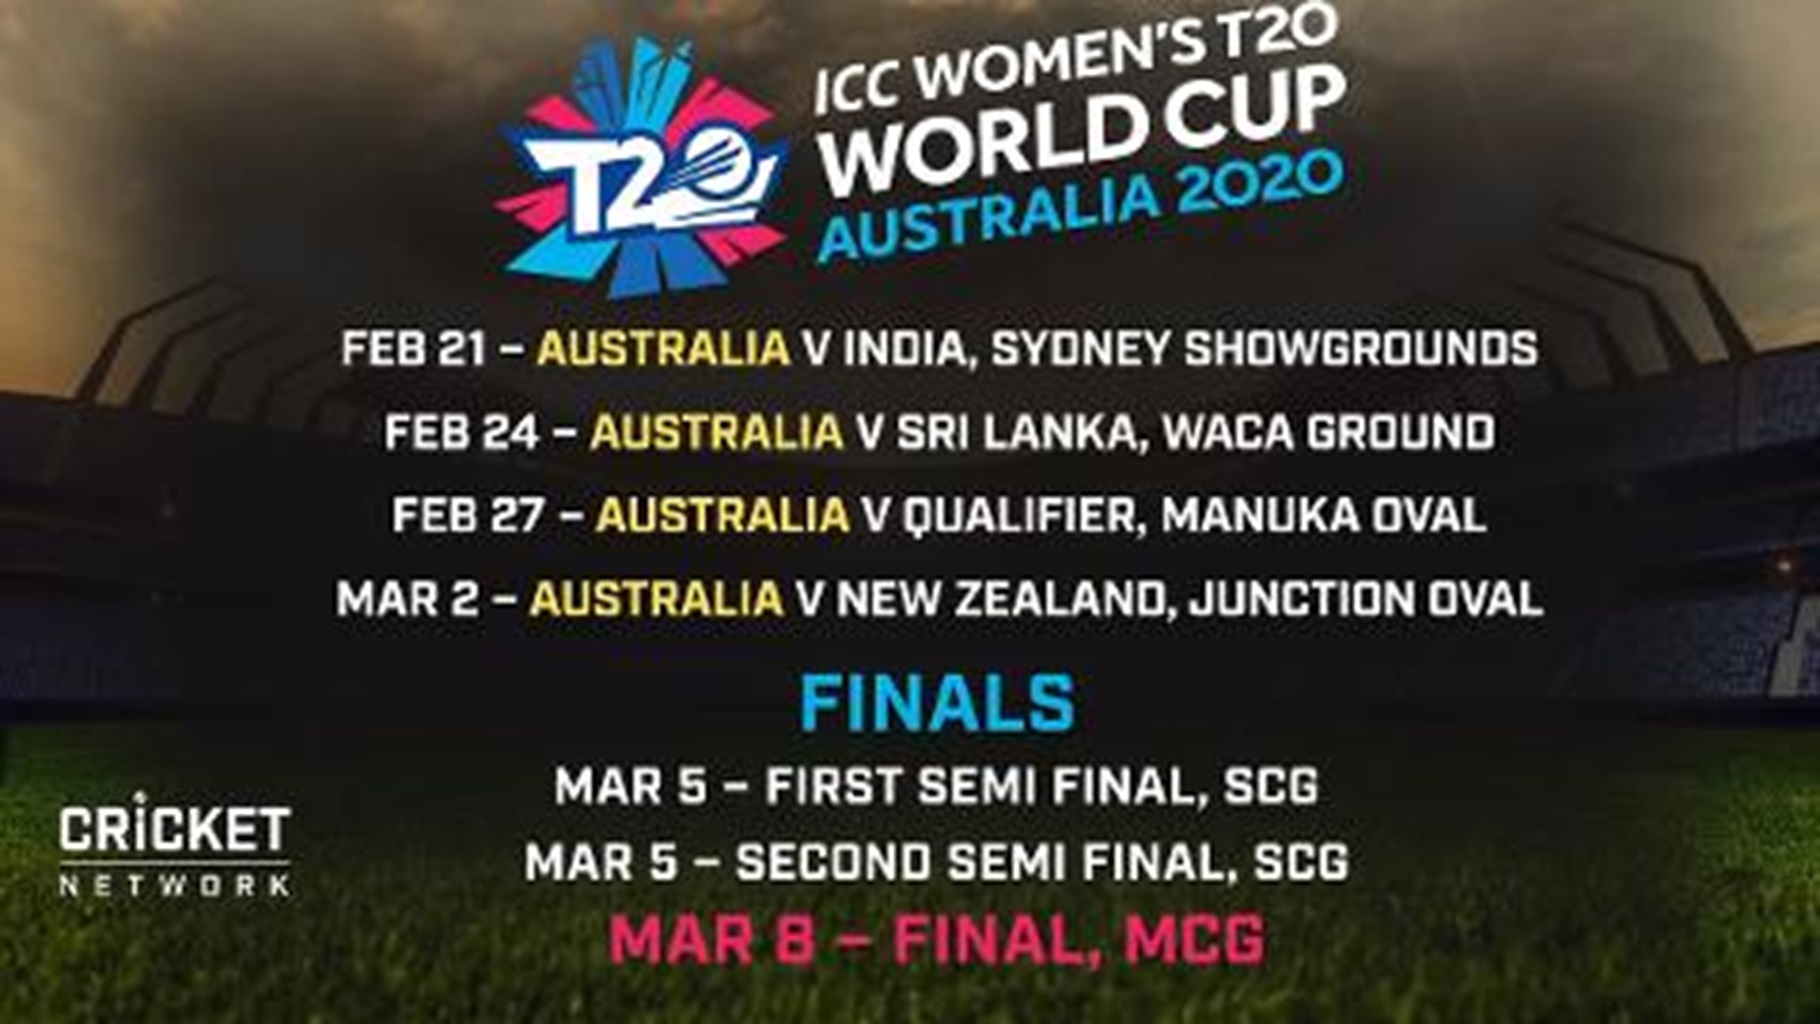 Icc Women’s T20 World Cup 2020 Schedule